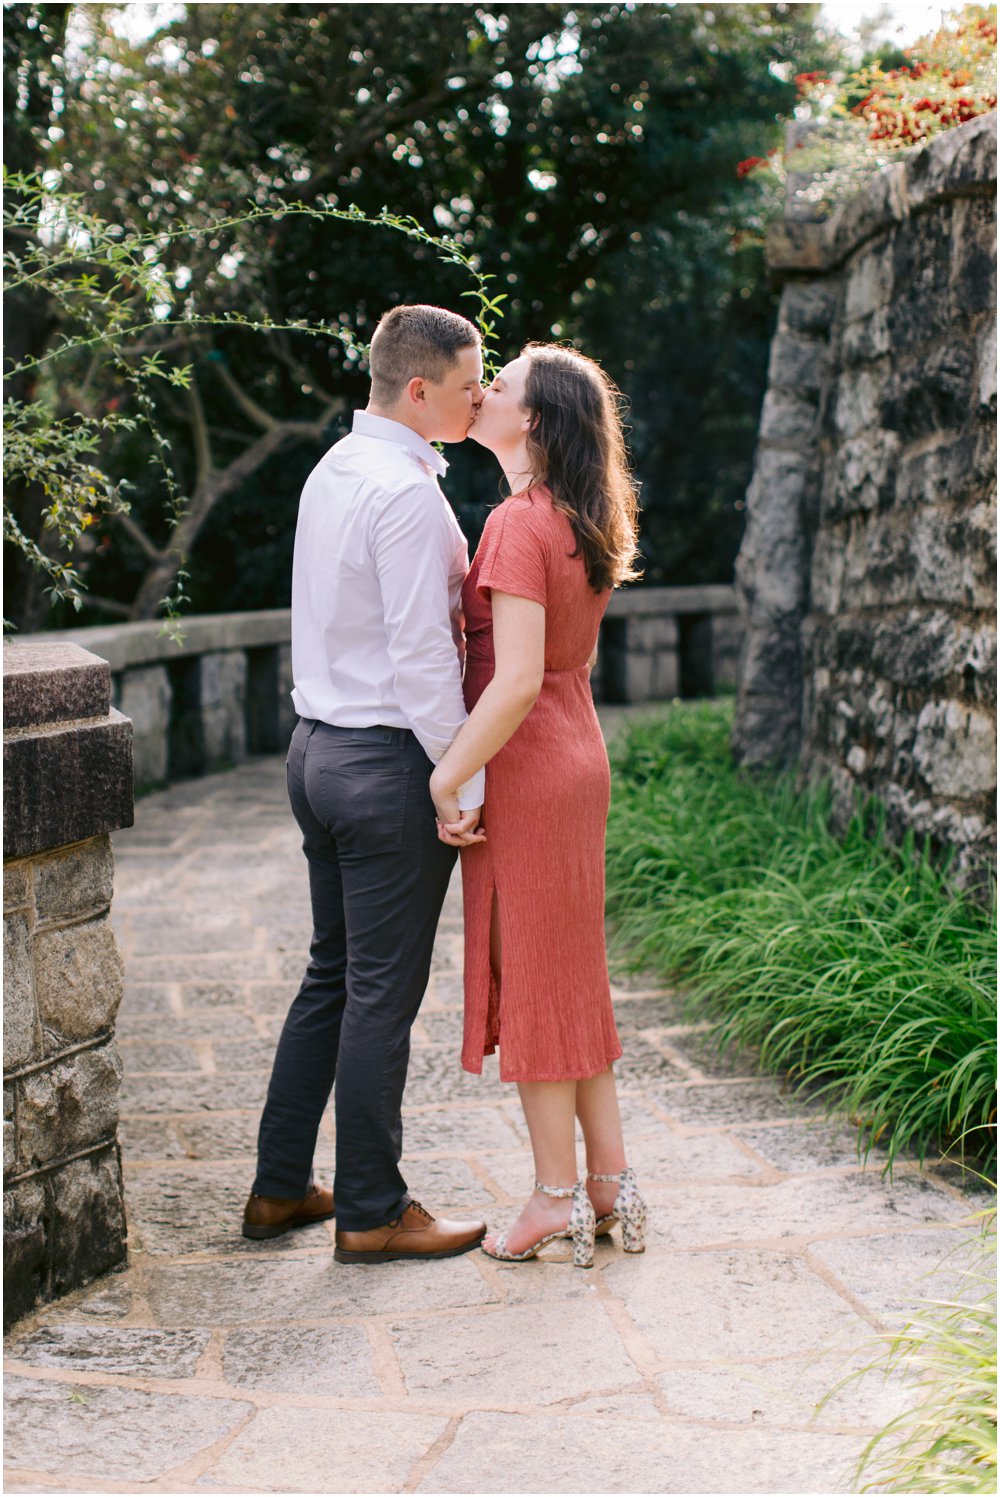 An engaged couple kisses on a stony park path